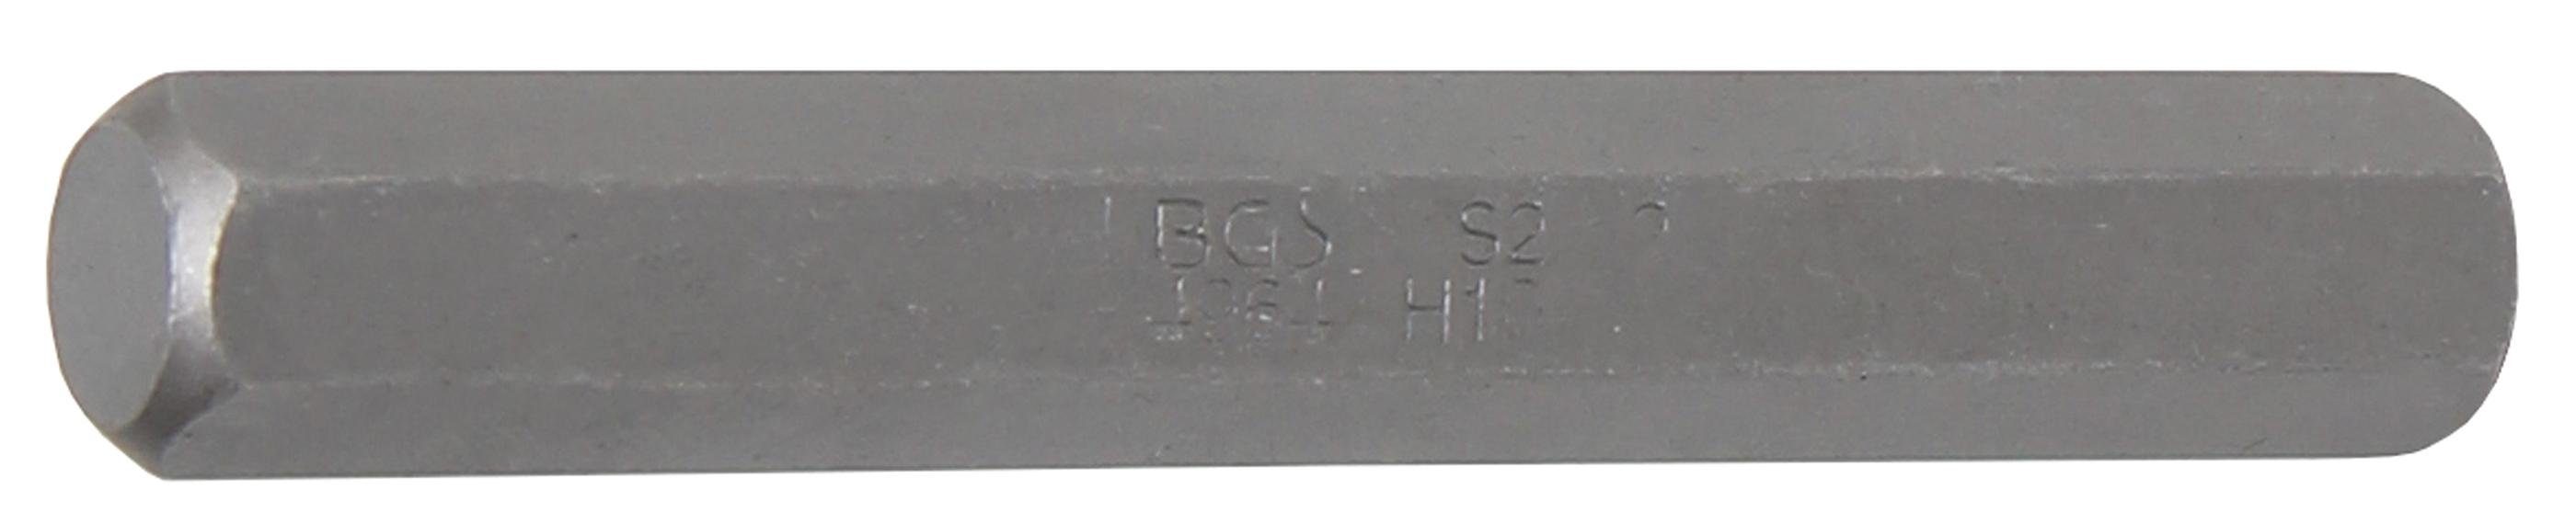 BGS technic Sechskant-Bit Bit, Länge 75 mm, Antrieb Außensechskant 10 mm (3/8), Innensechskant 10 mm